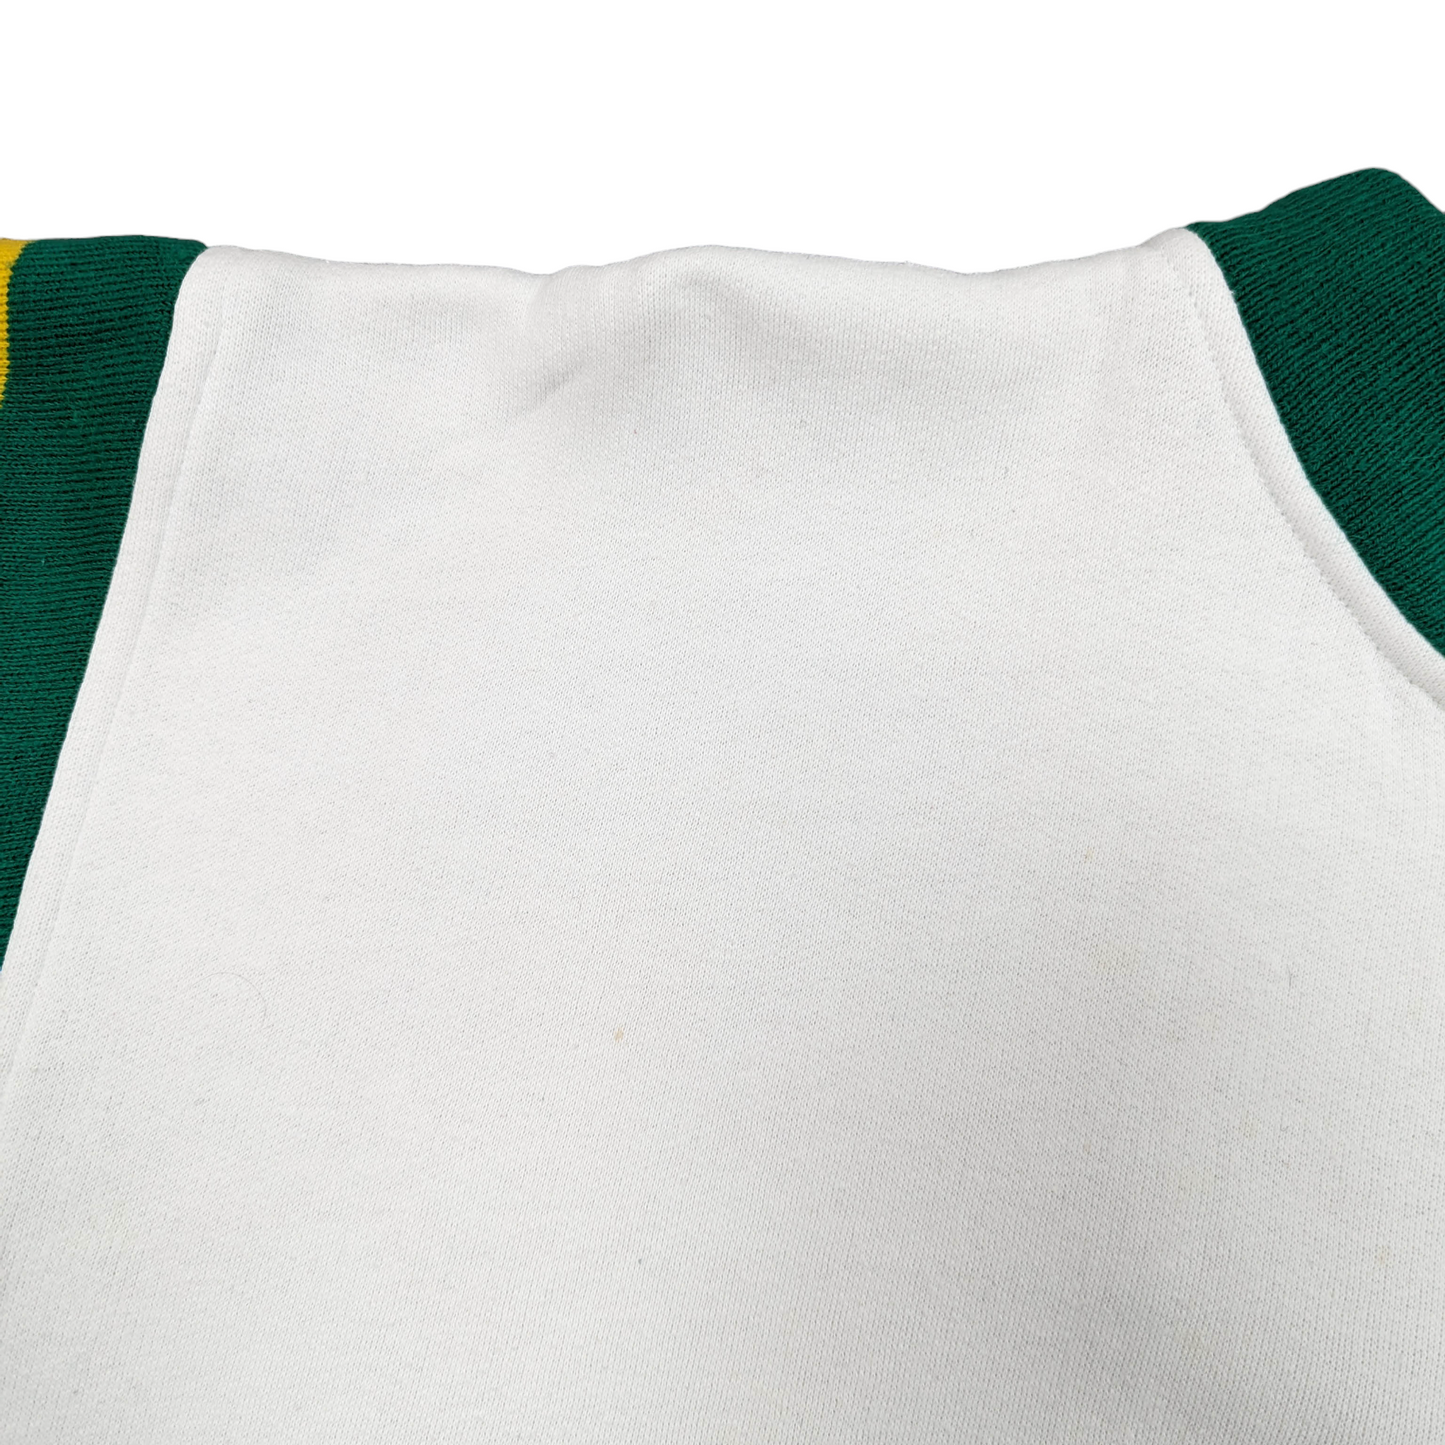 80s Starter Boston Celtics Sweatshirt Size L